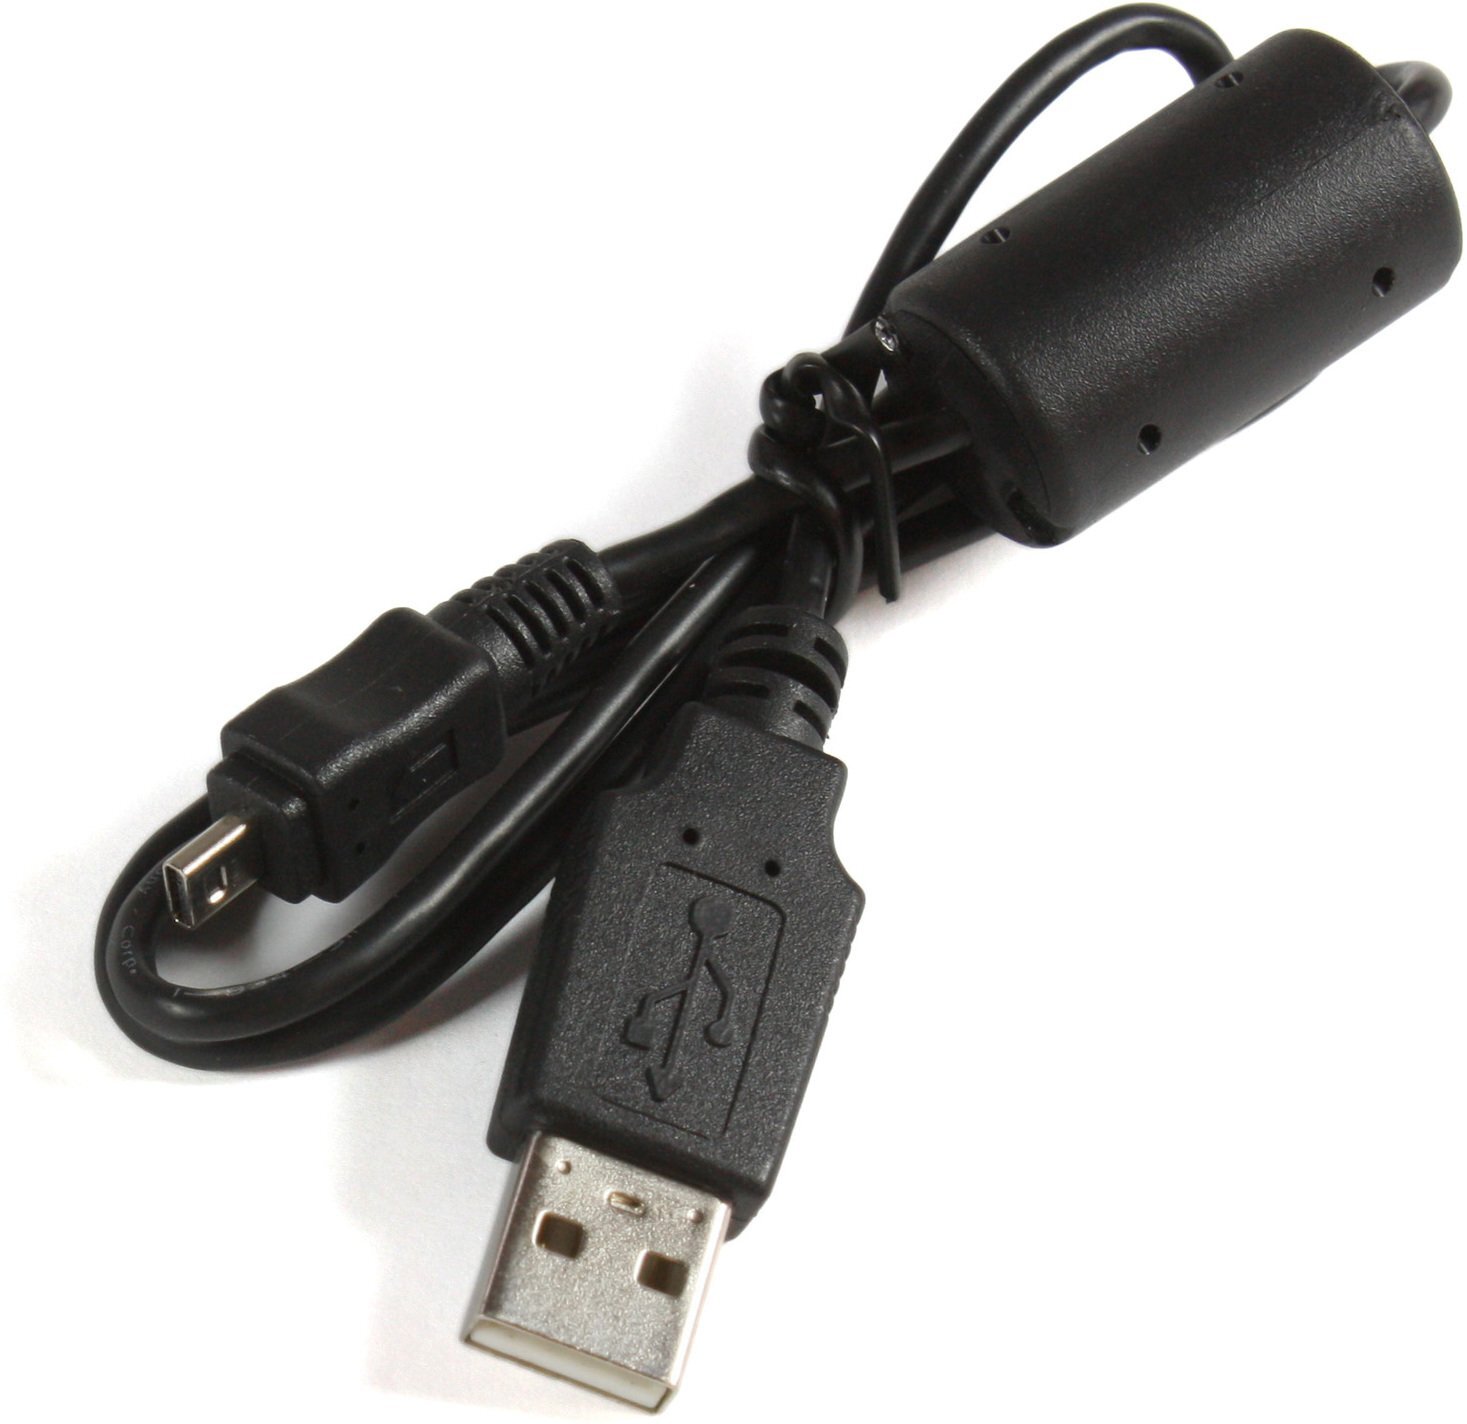 Sony USB Cord met Connector